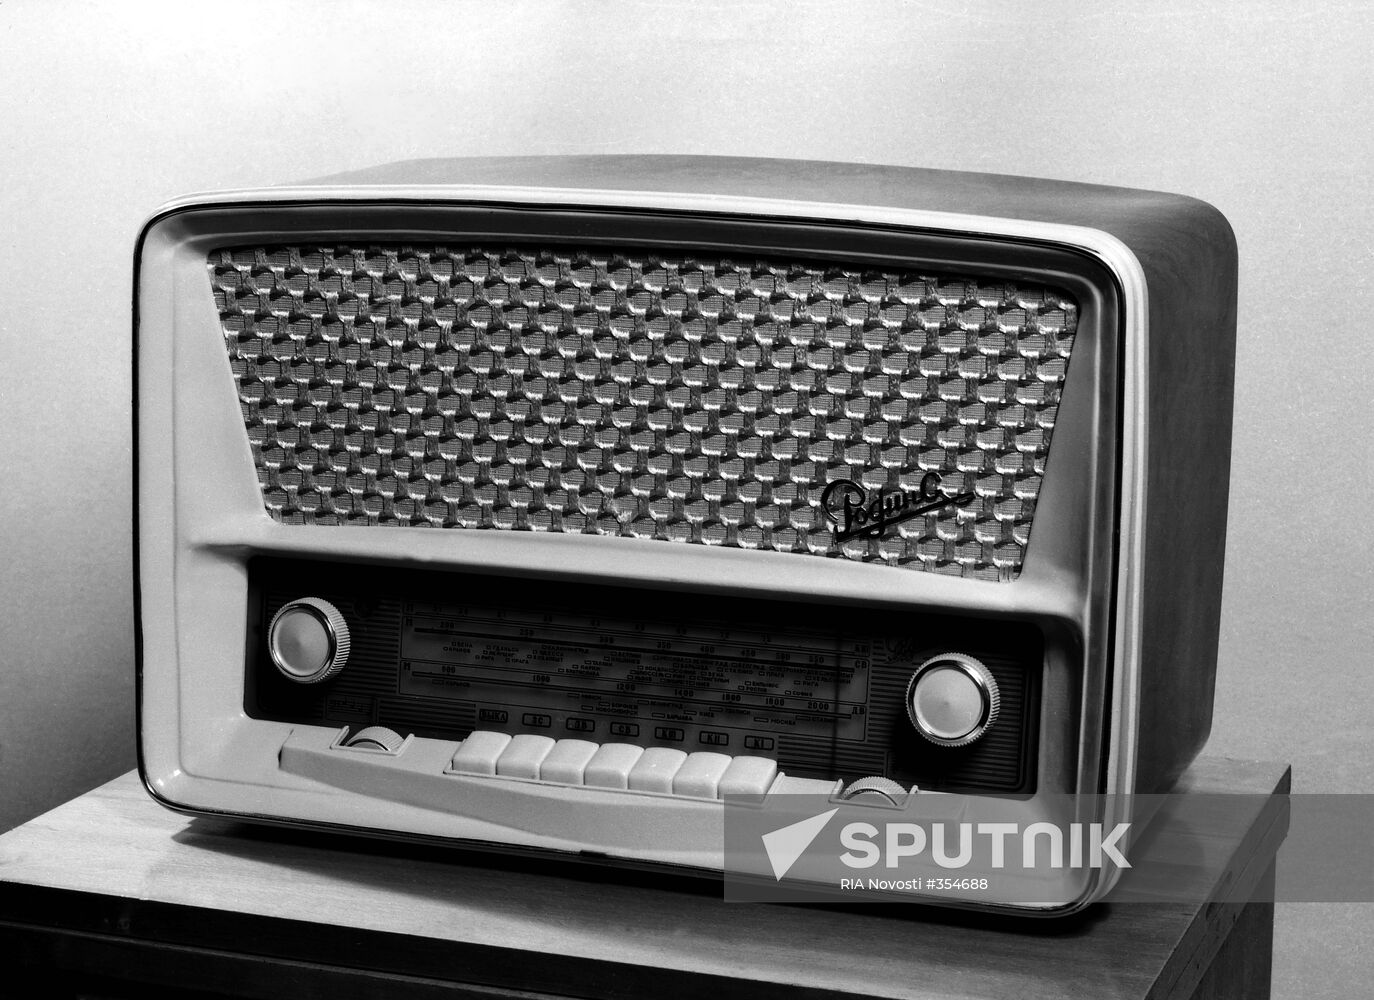 The Rodina radio set